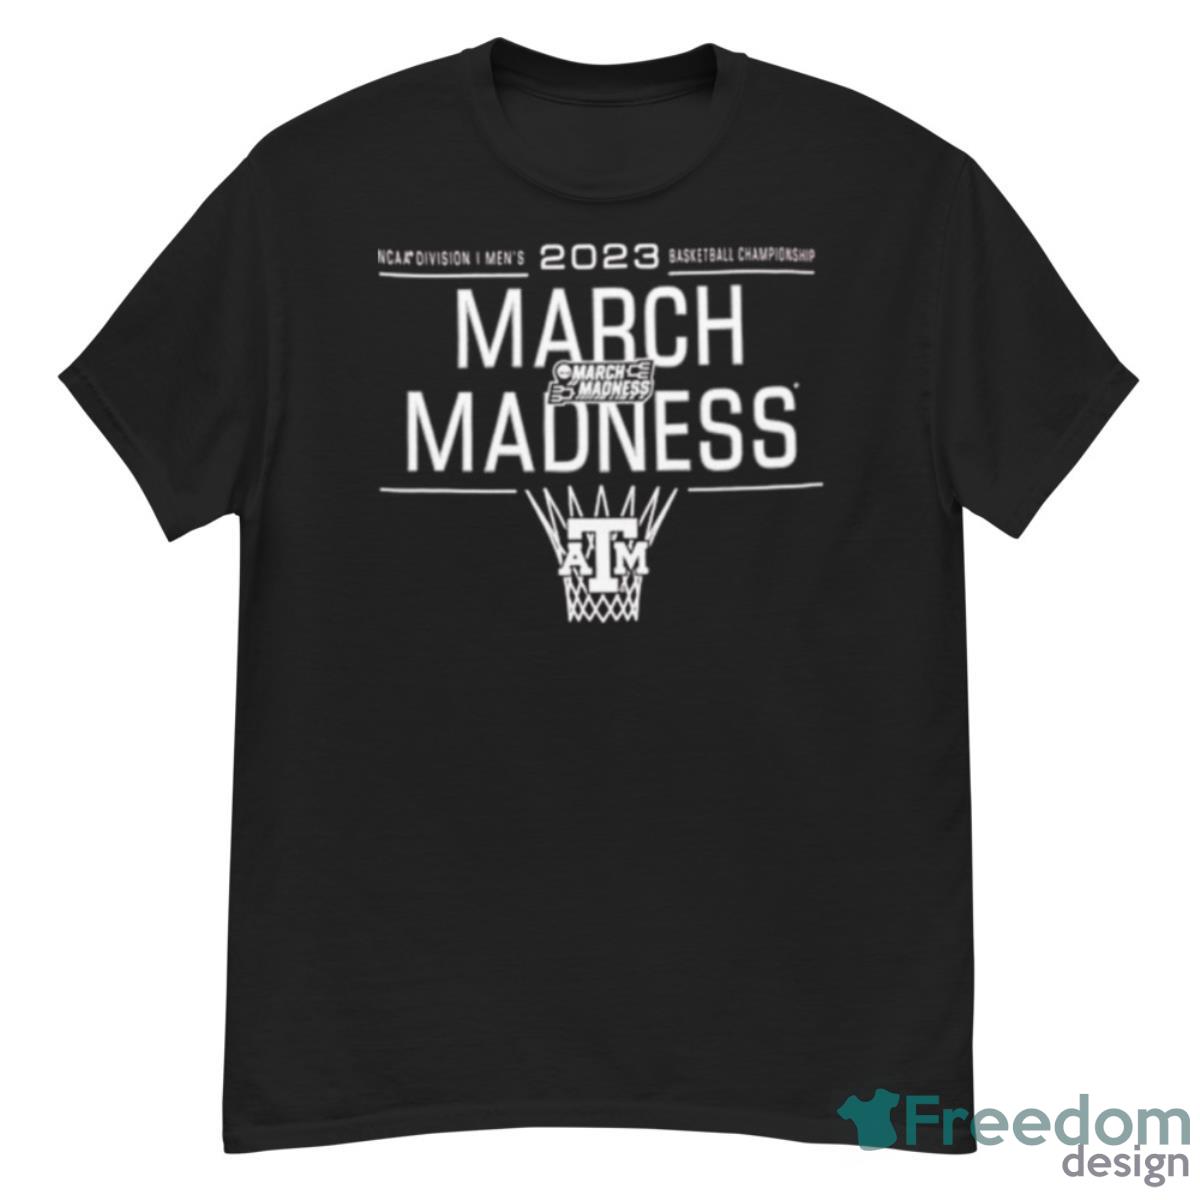 Texas A&M Aggies 2023 NCAA division I Men’s Basketball championship March Madness shirt - G500 Men’s Classic T-Shirt